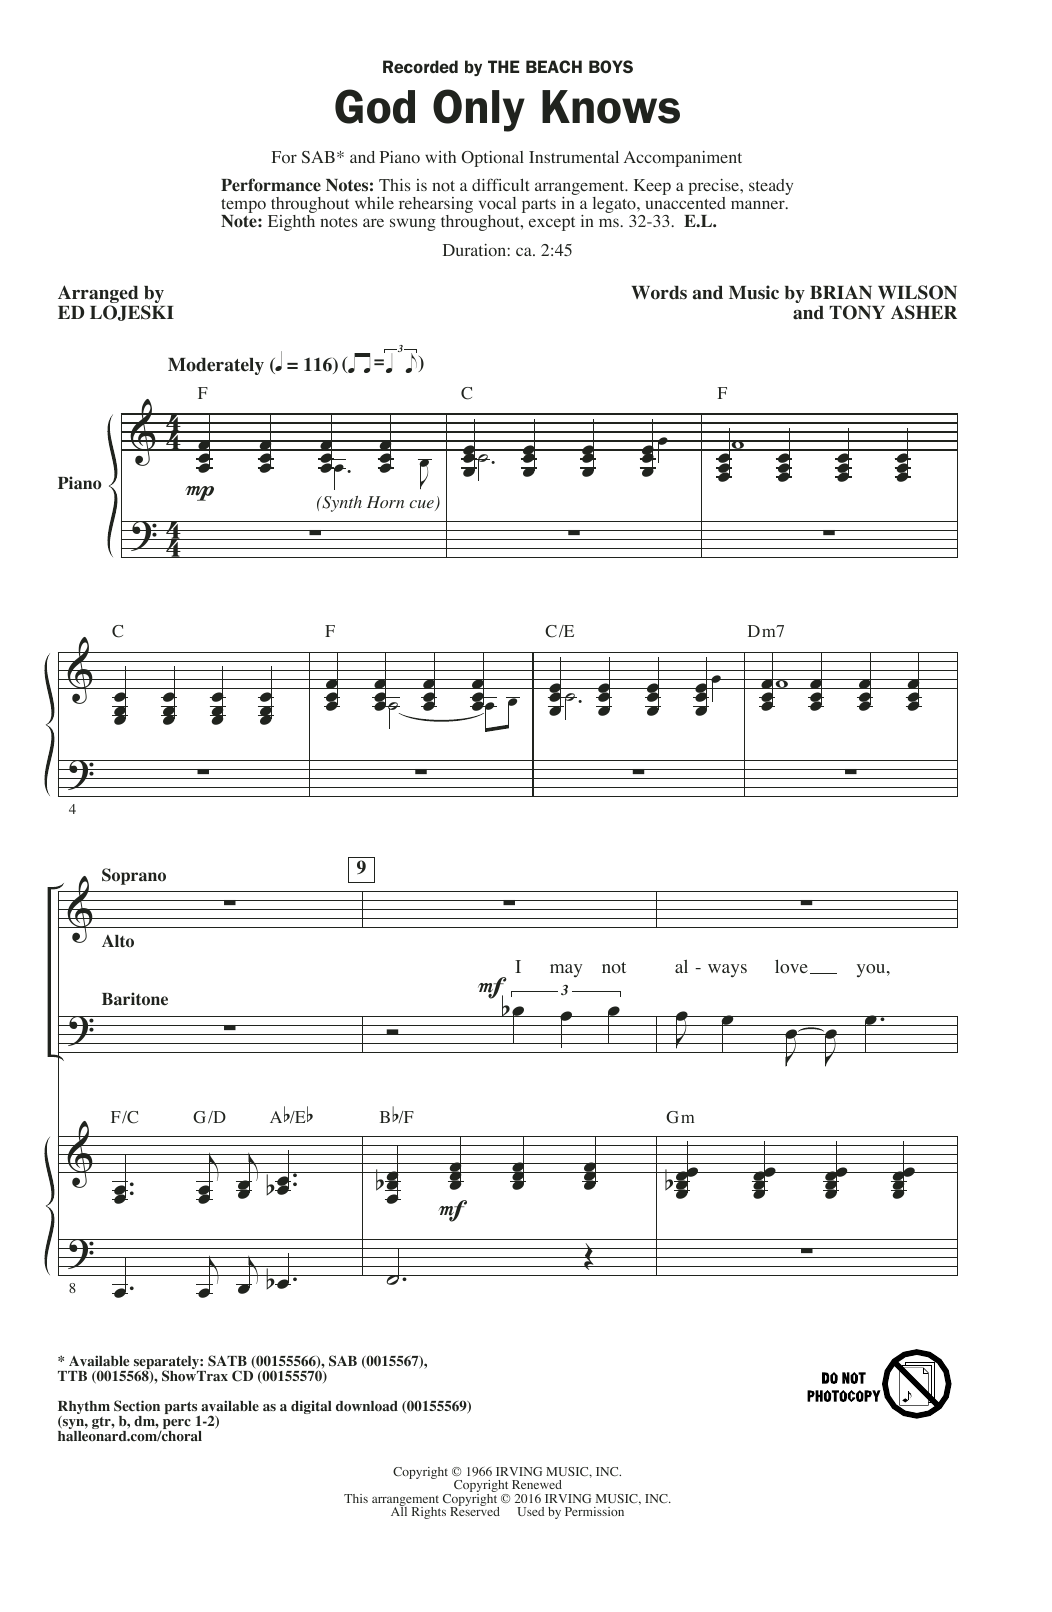 The Beach Boys God Only Knows (arr. Ed Lojeski) sheet music notes and chords arranged for SAB Choir